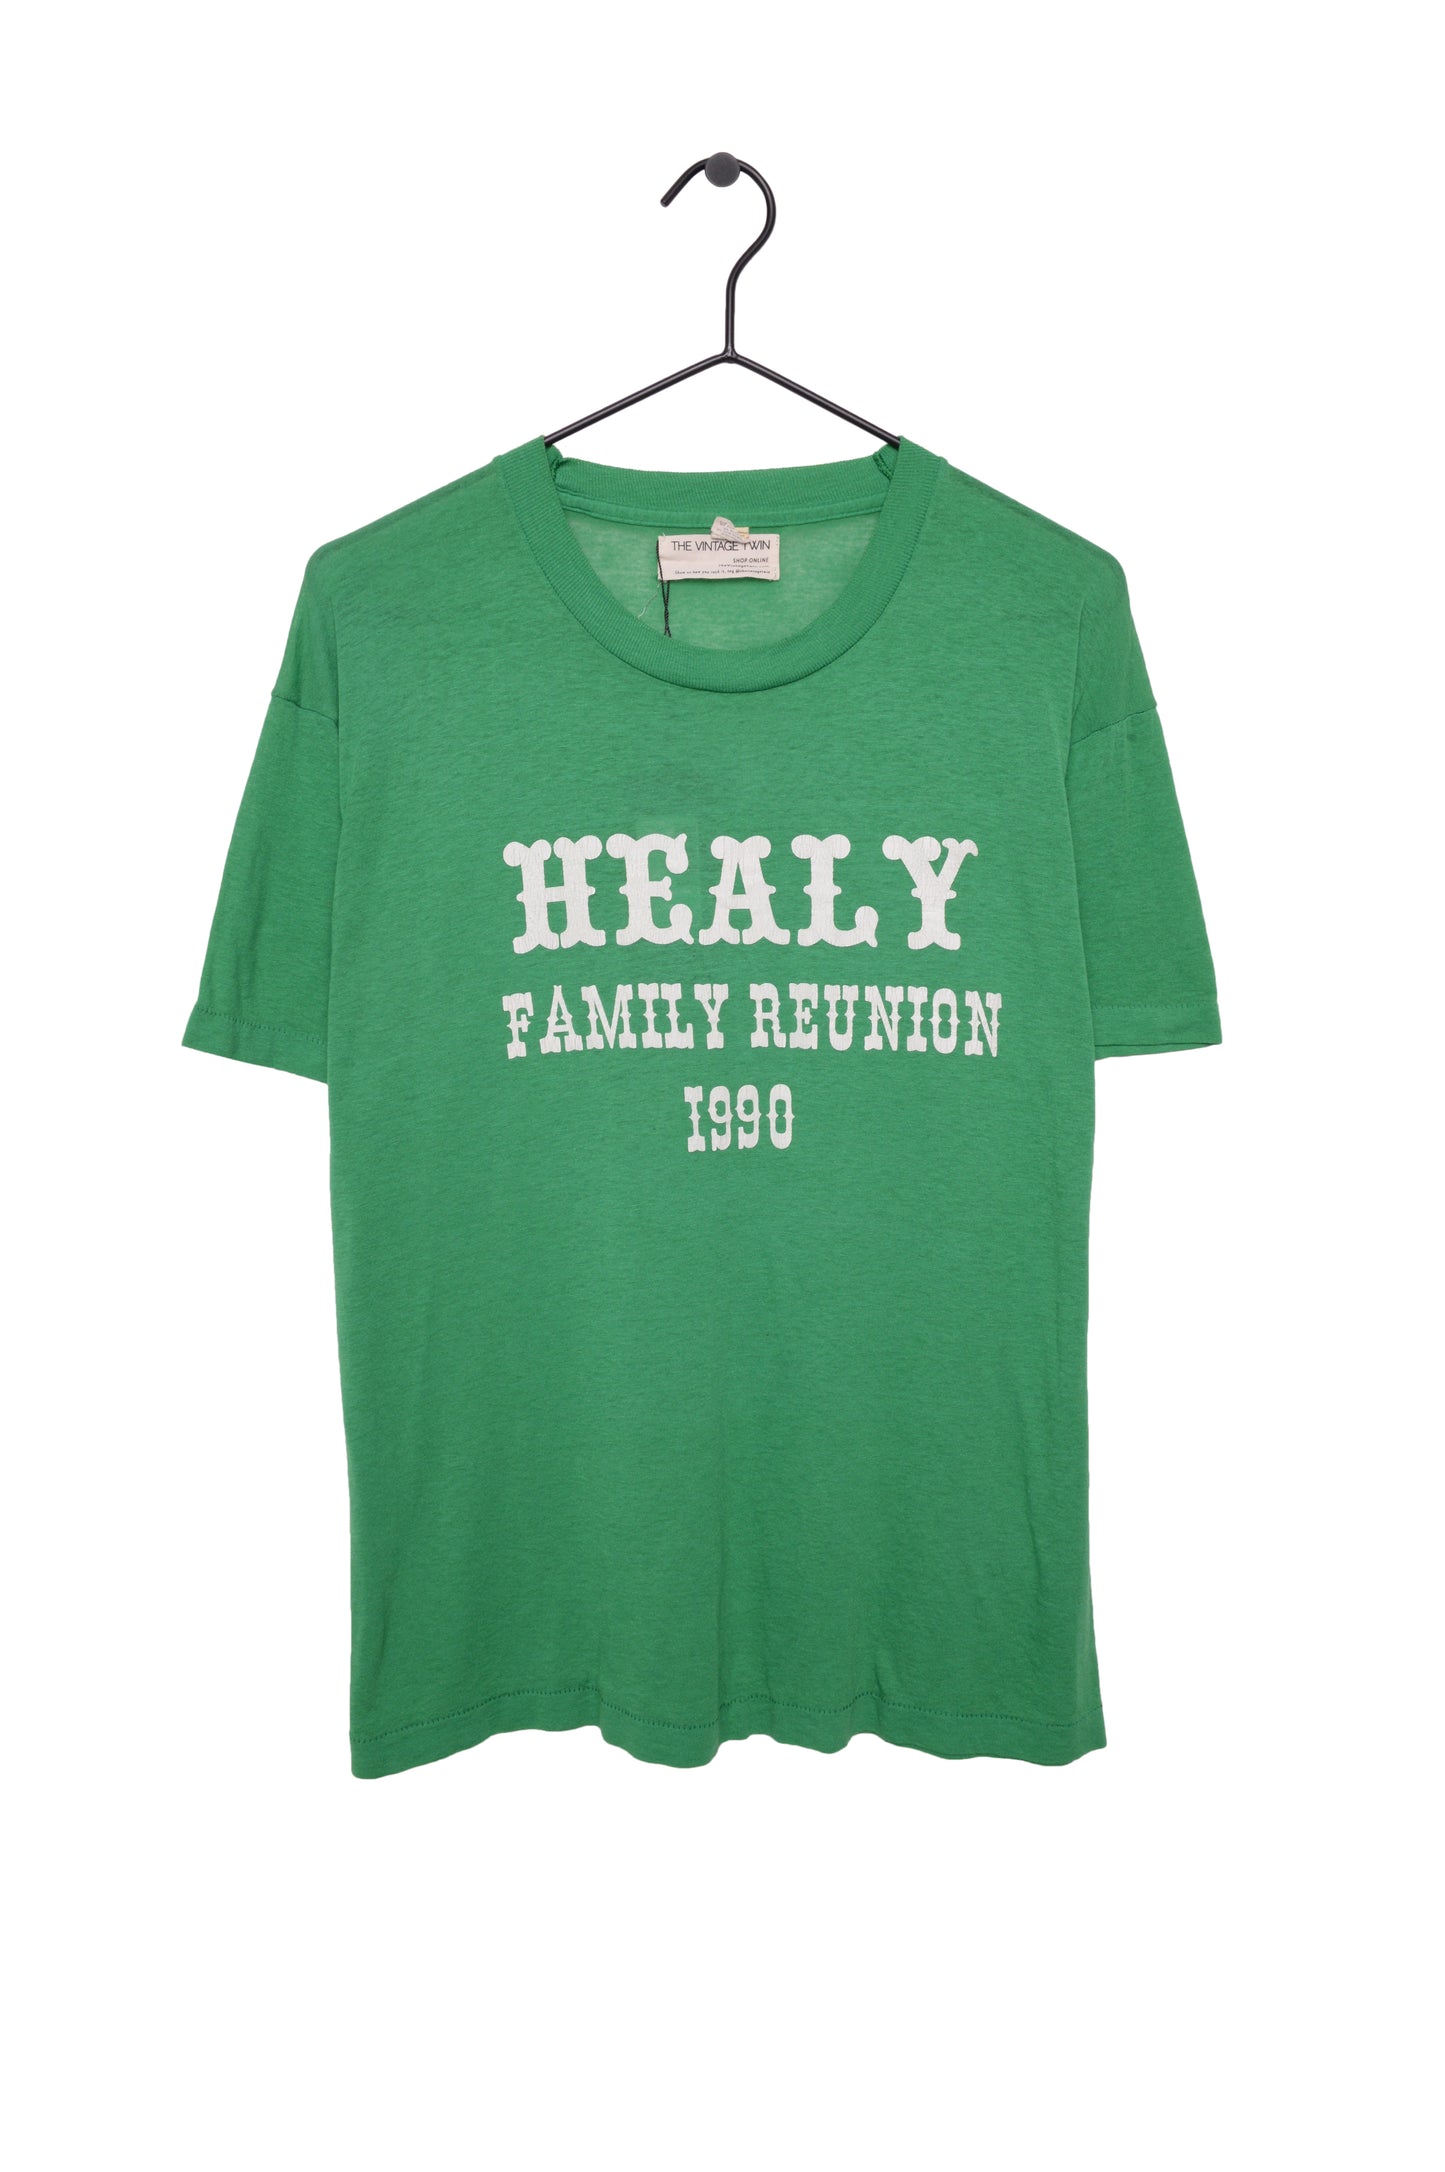 1990 Healy Family Reunion Tee USA